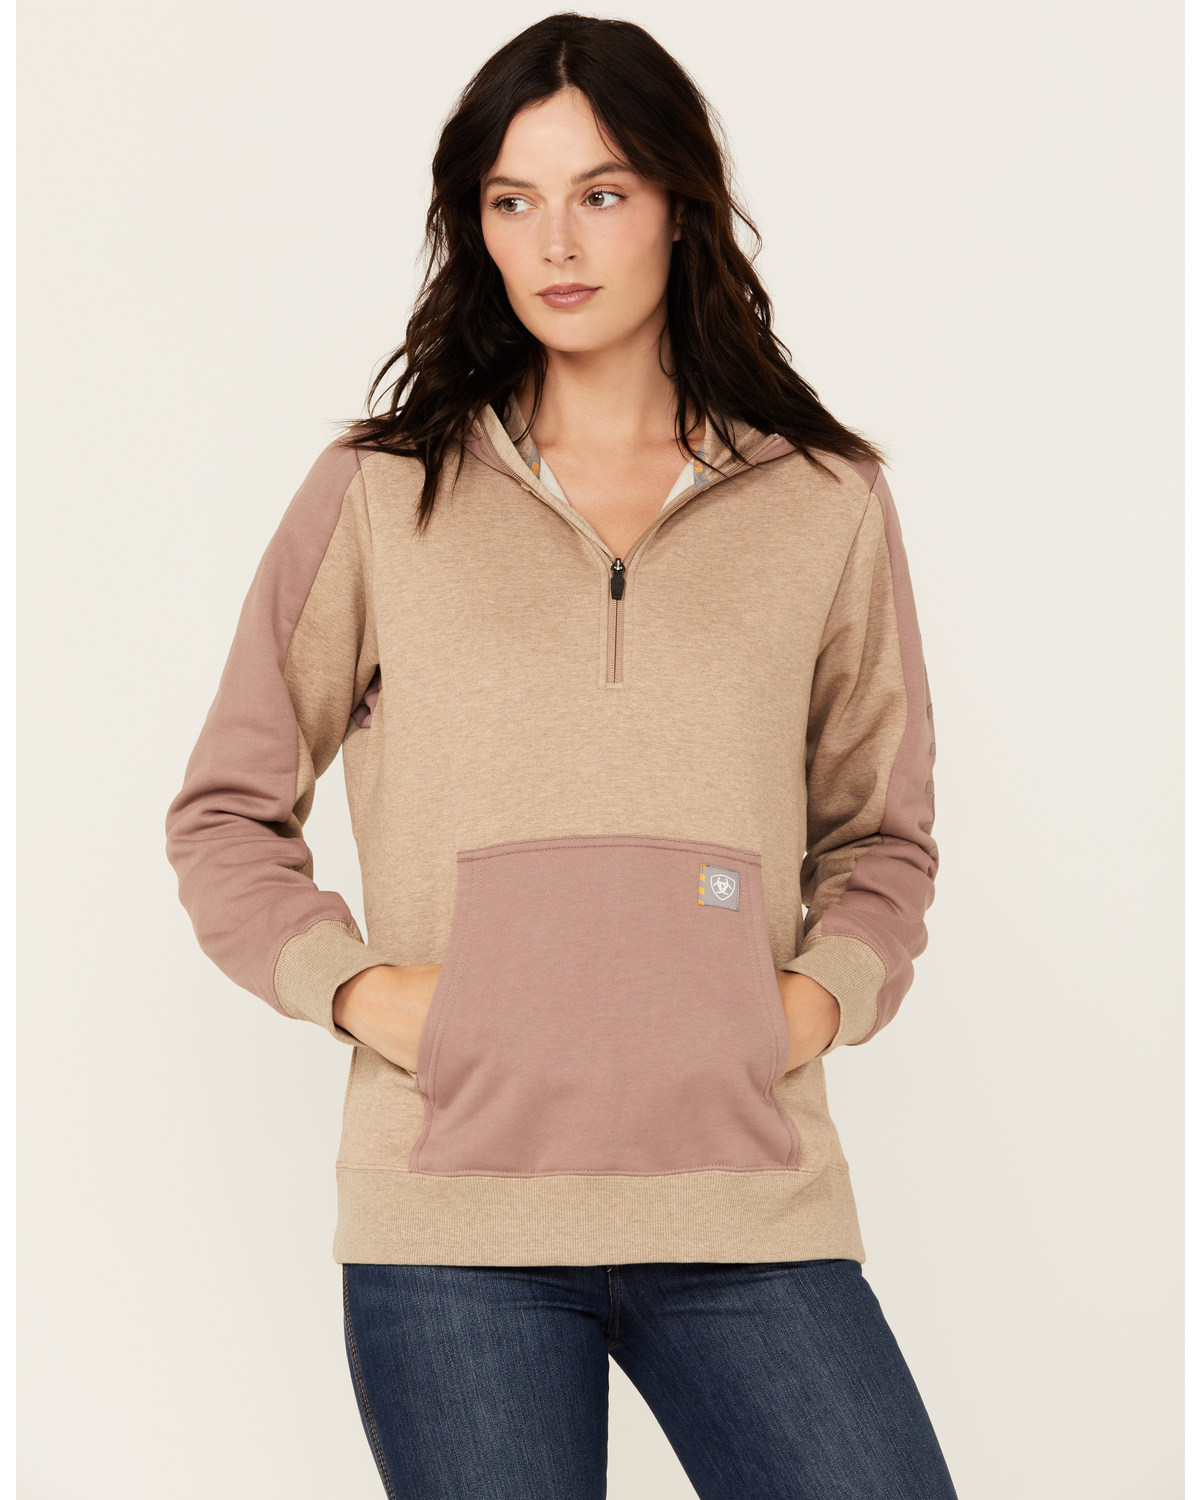 Ariat Women's Rebar Oversized 1/2 Zip Hooded Pullover